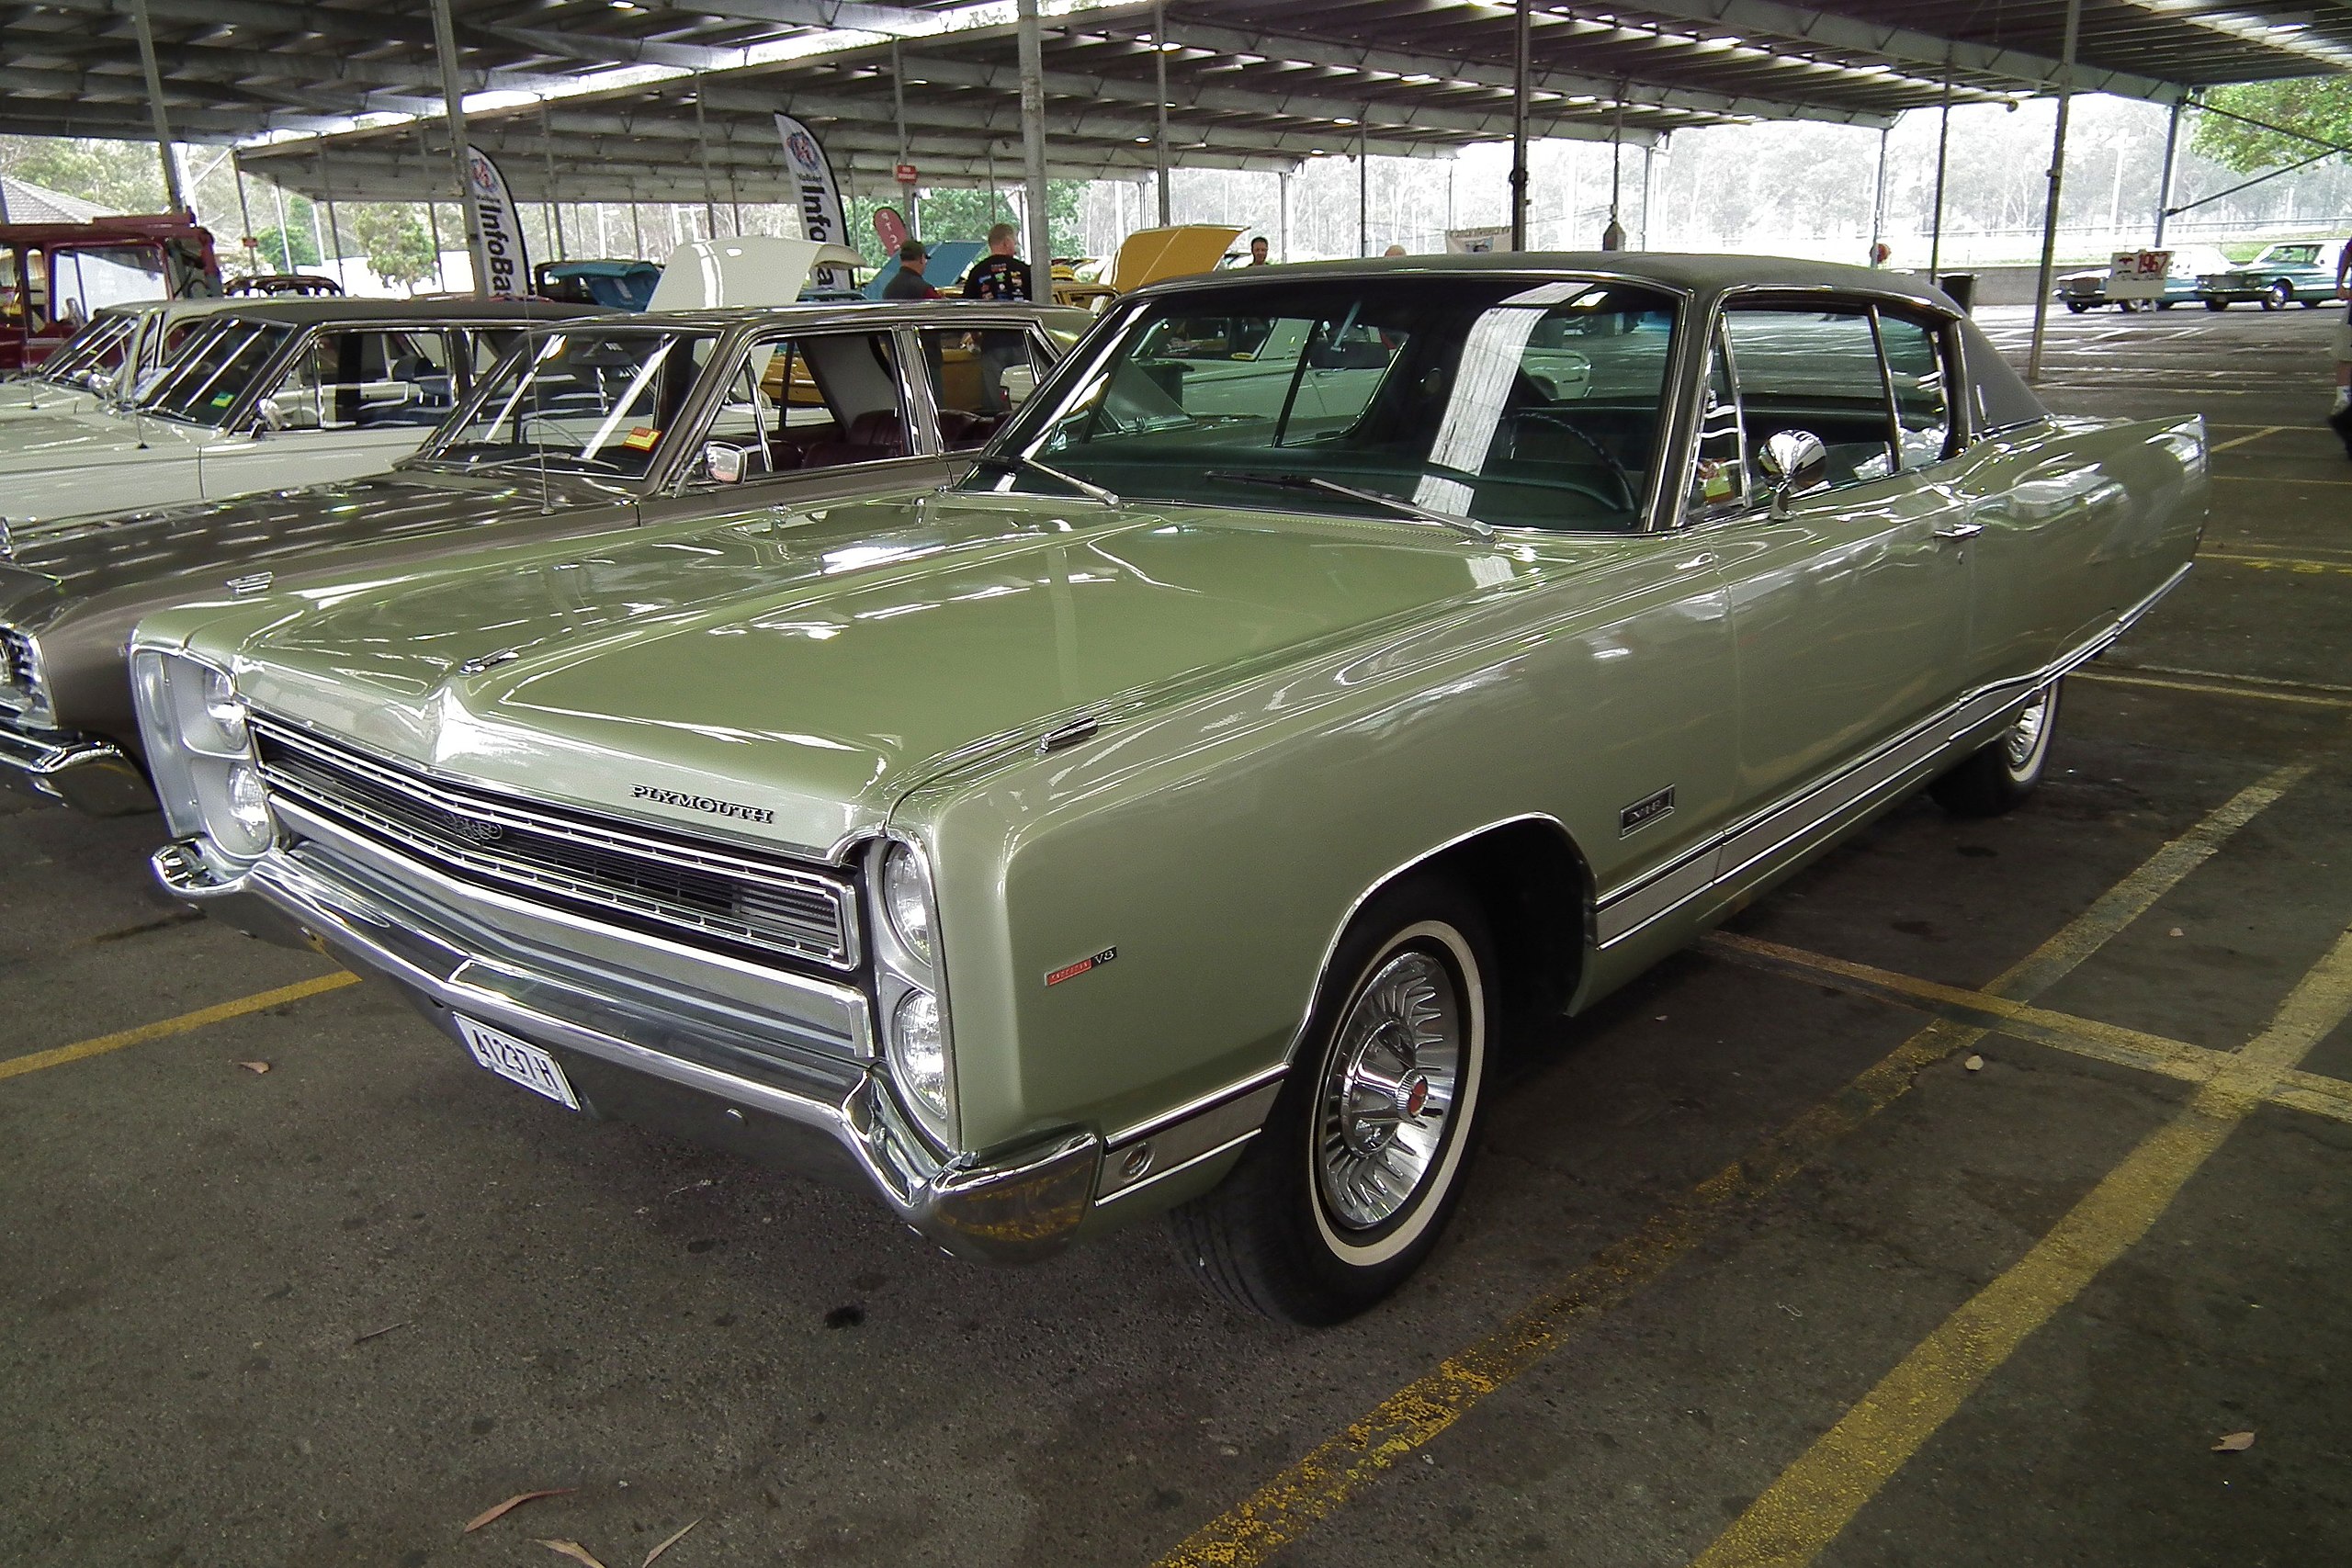 File:1968 Plymouth VIP hardtop (6335467413).jpg - Wikimedia Commons